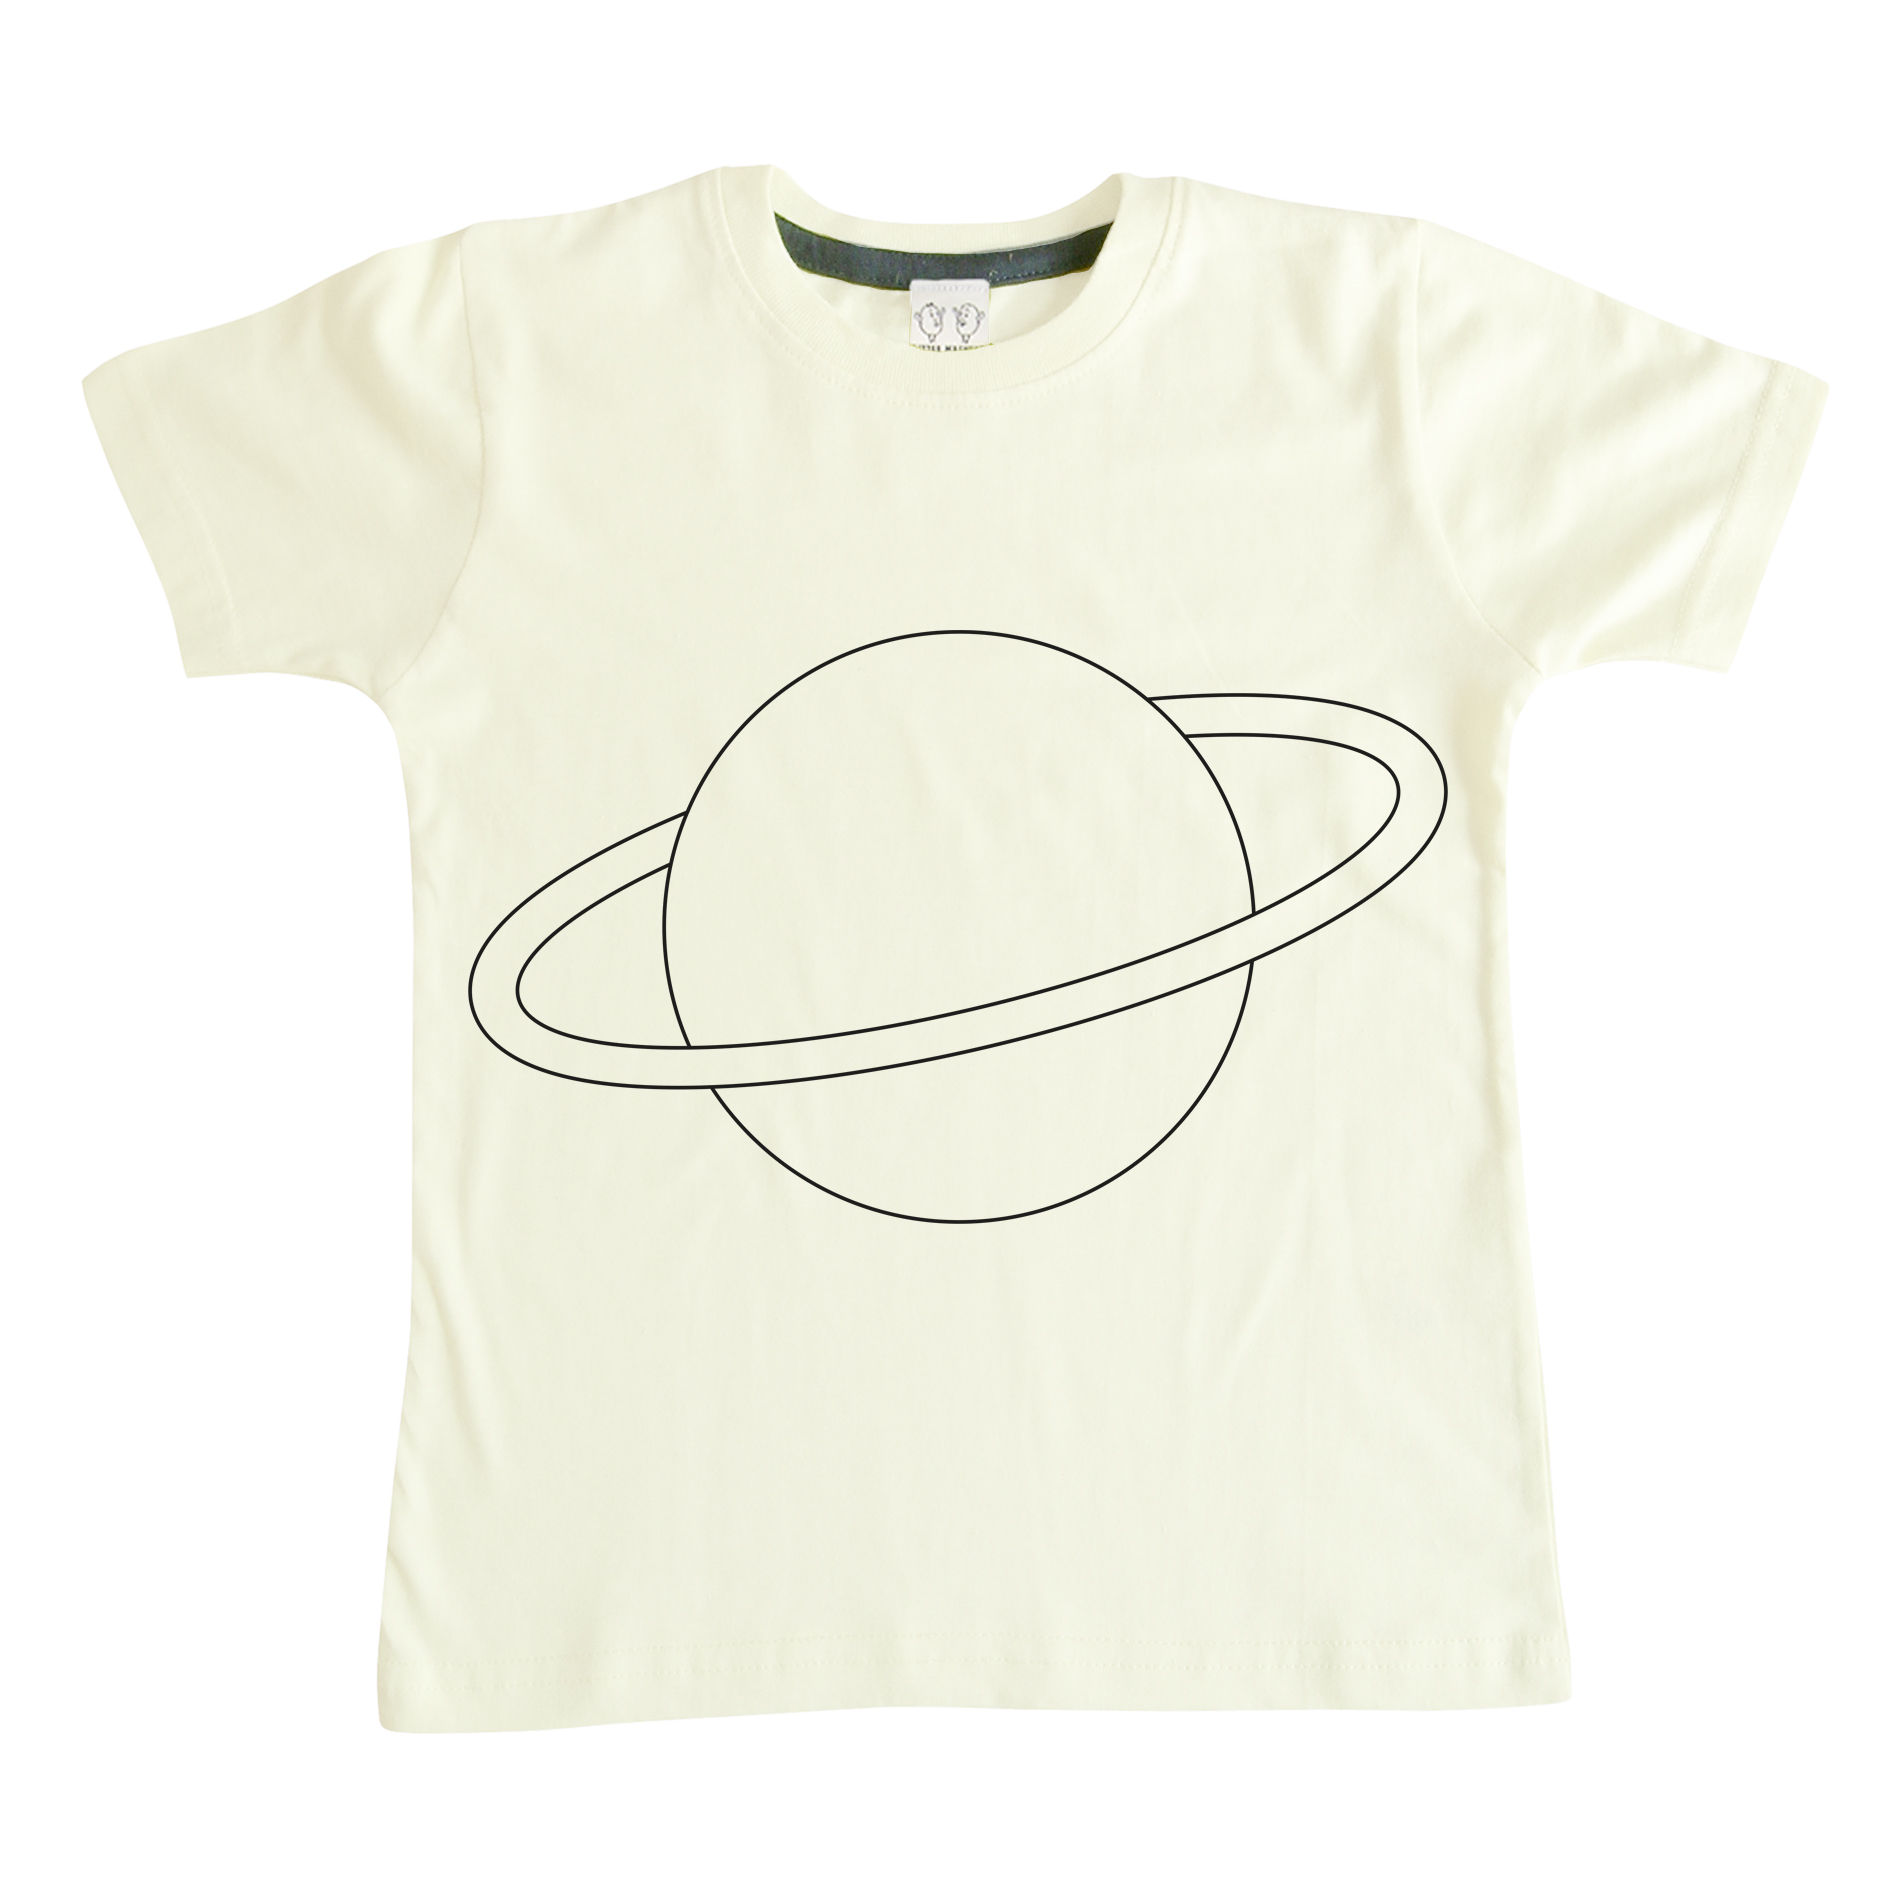                                                                                                                                                                       T-Shirt Creator Kit Space